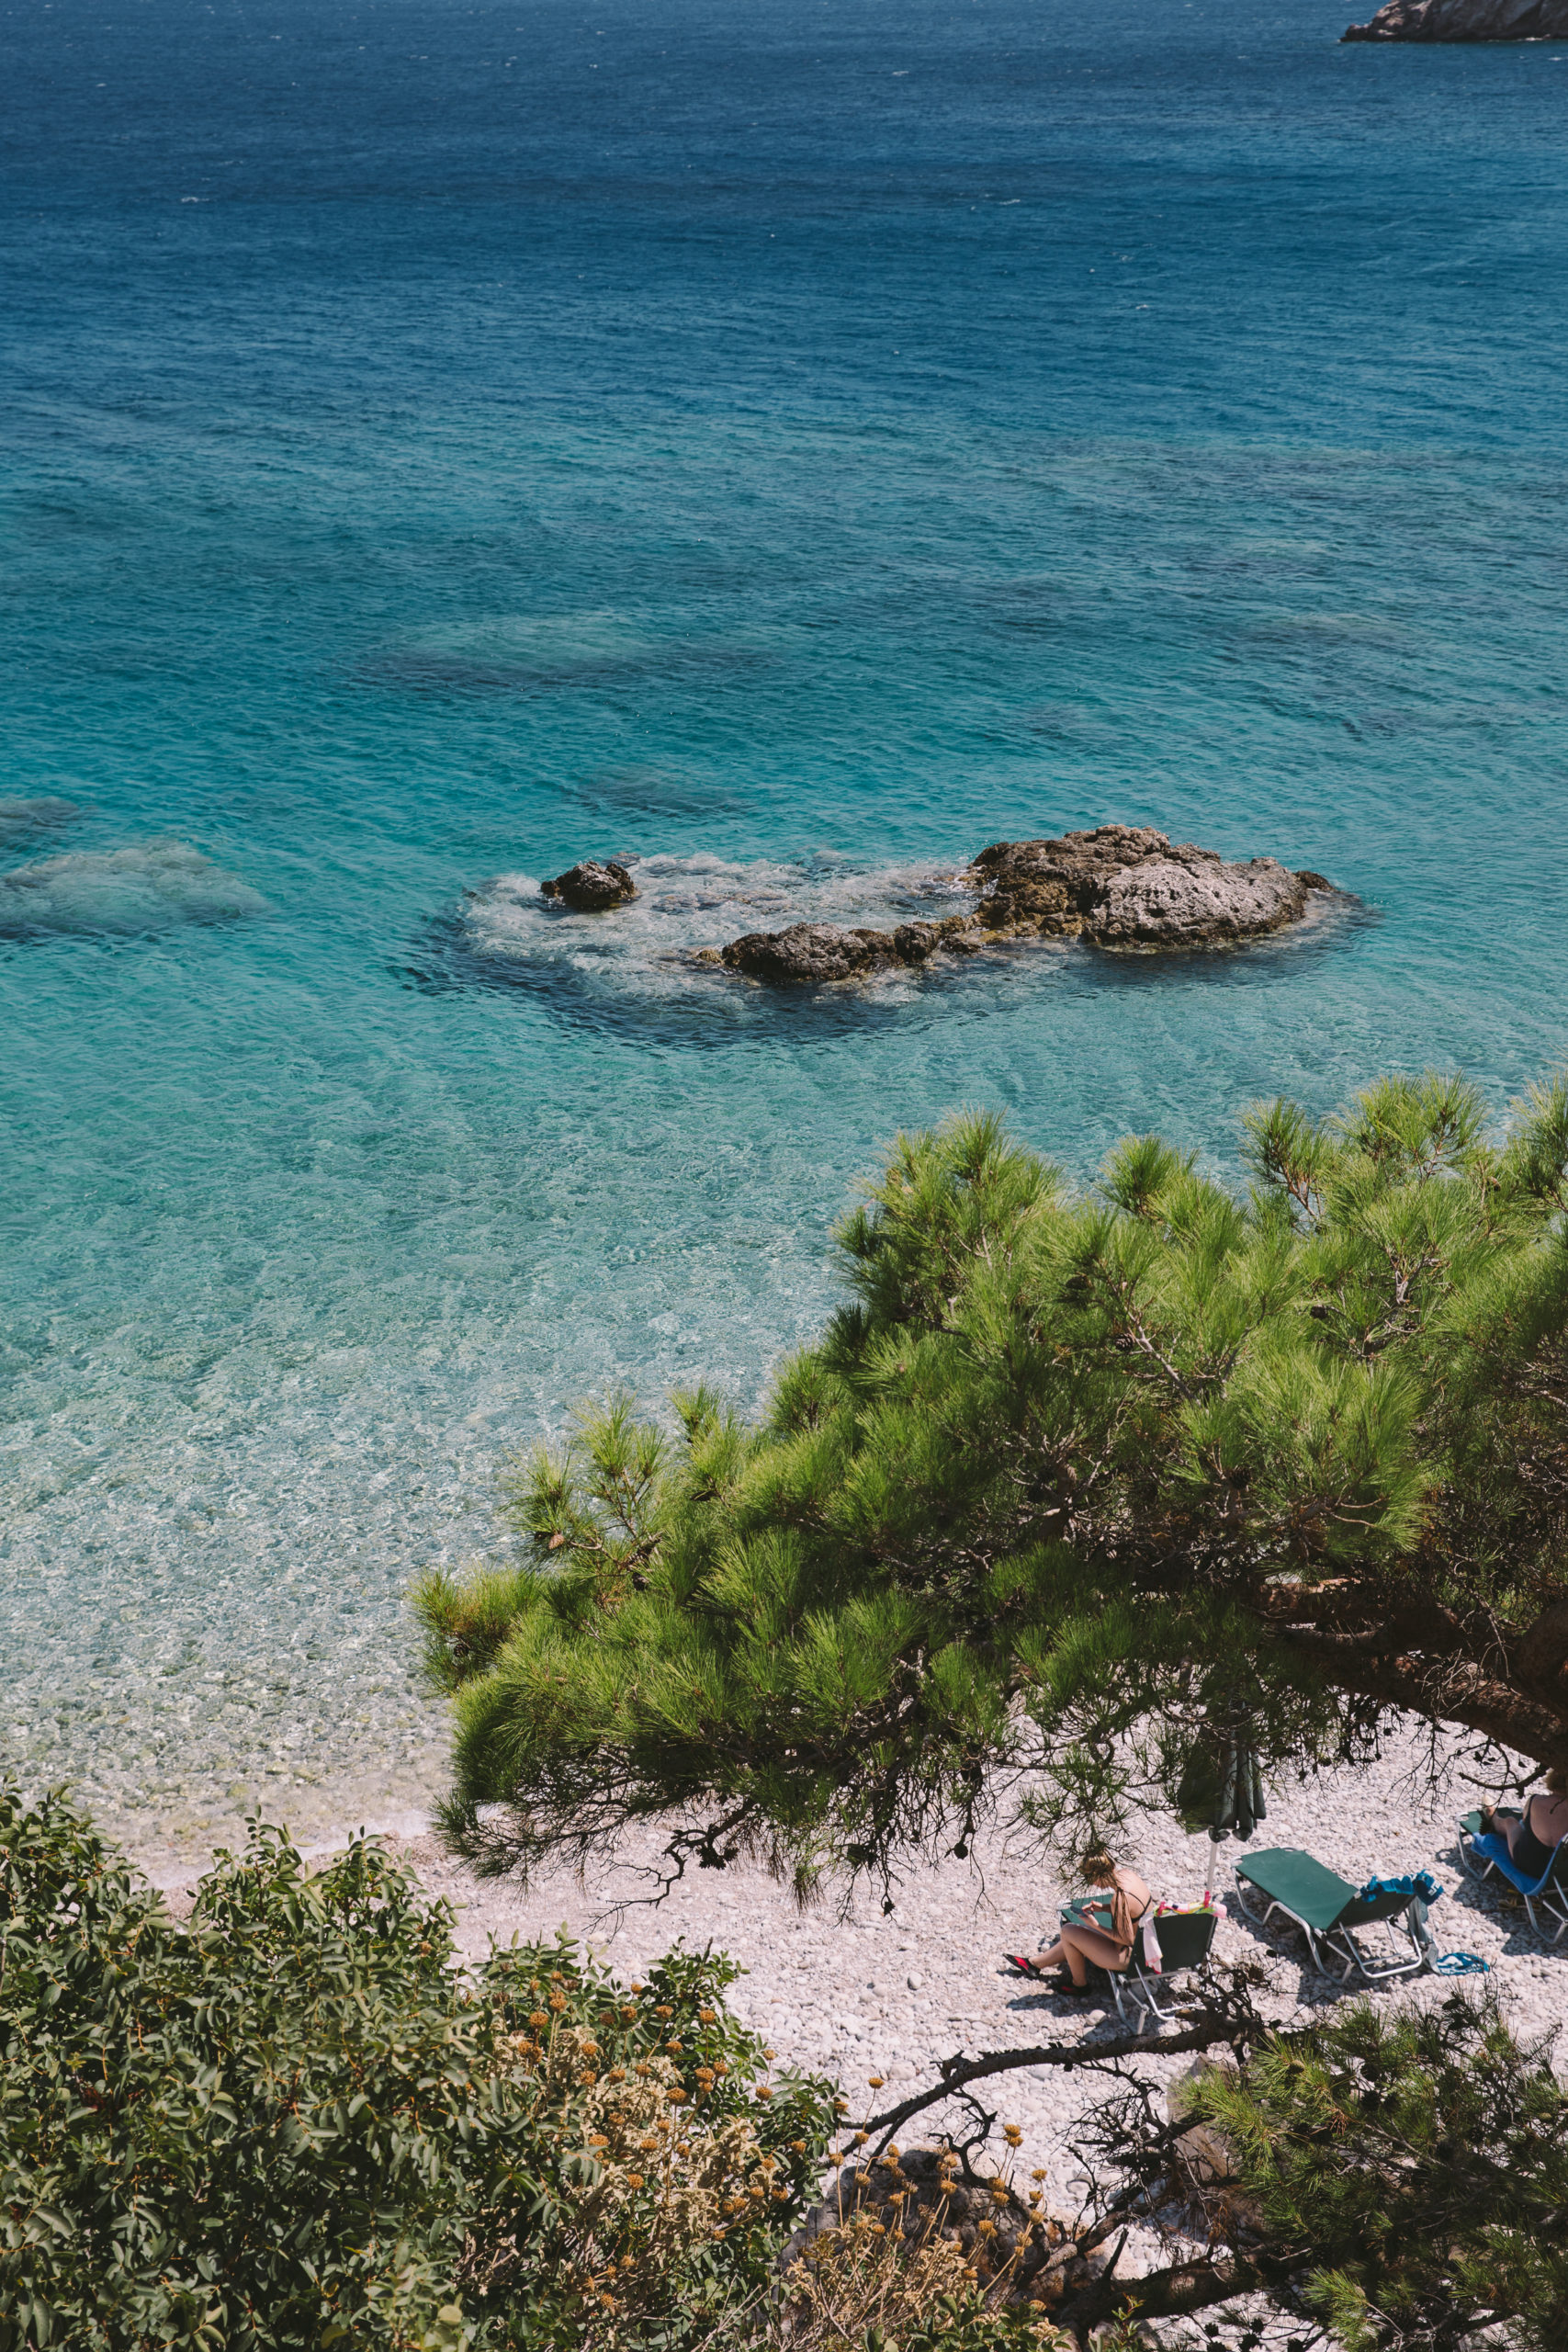 Karpathos Island, Greece